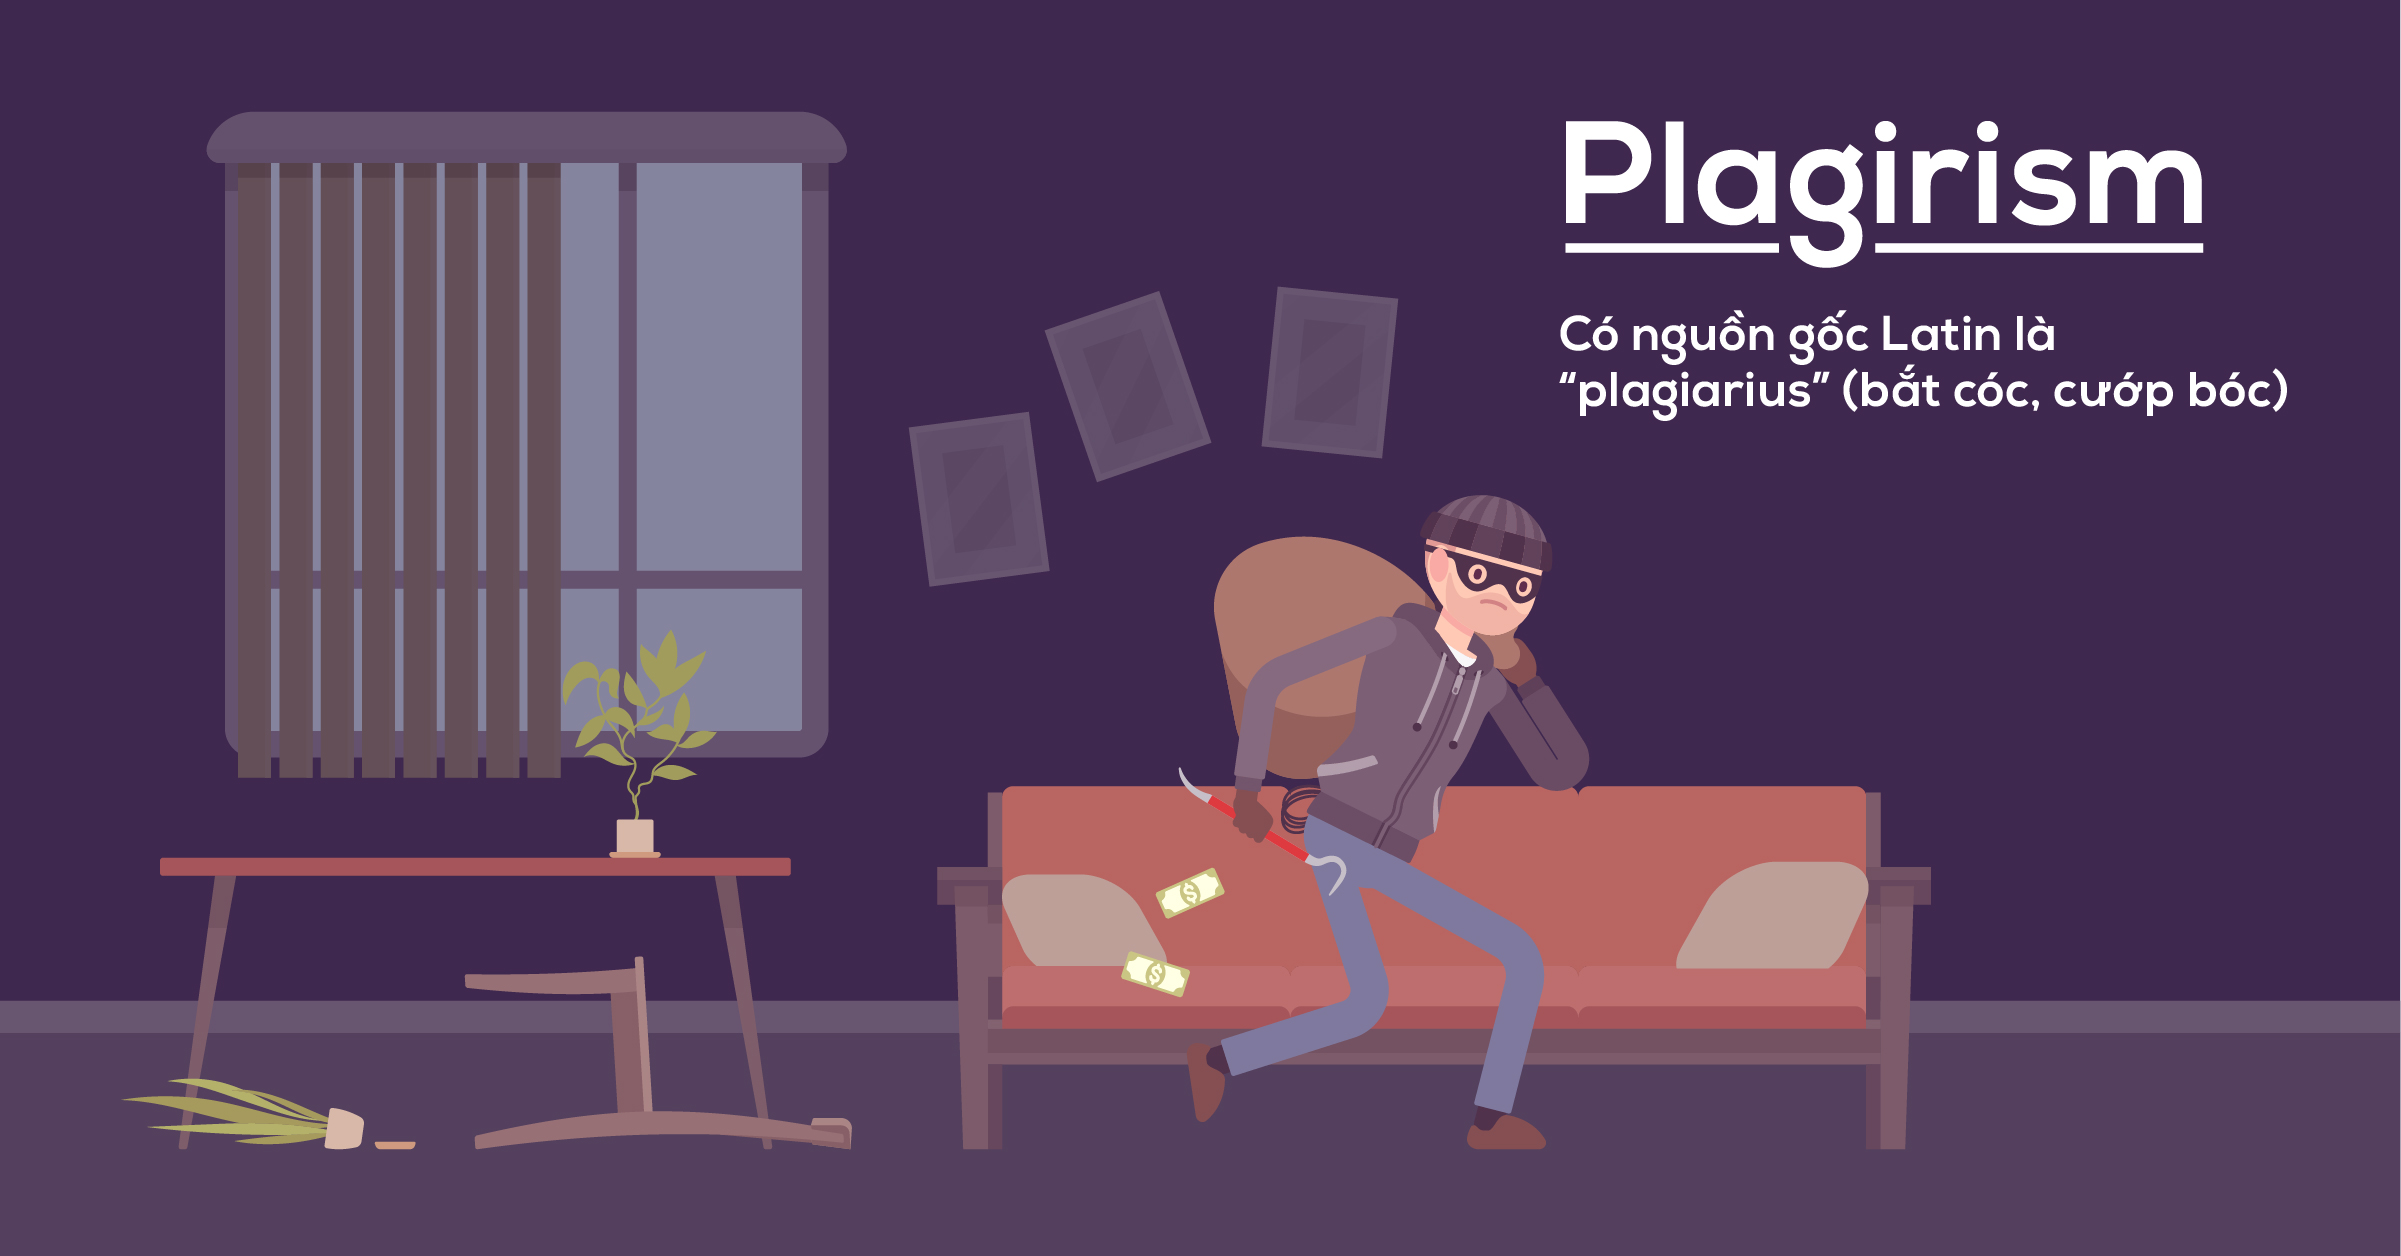 plagirism-co-nguon-goc-latin-la-plagiarius